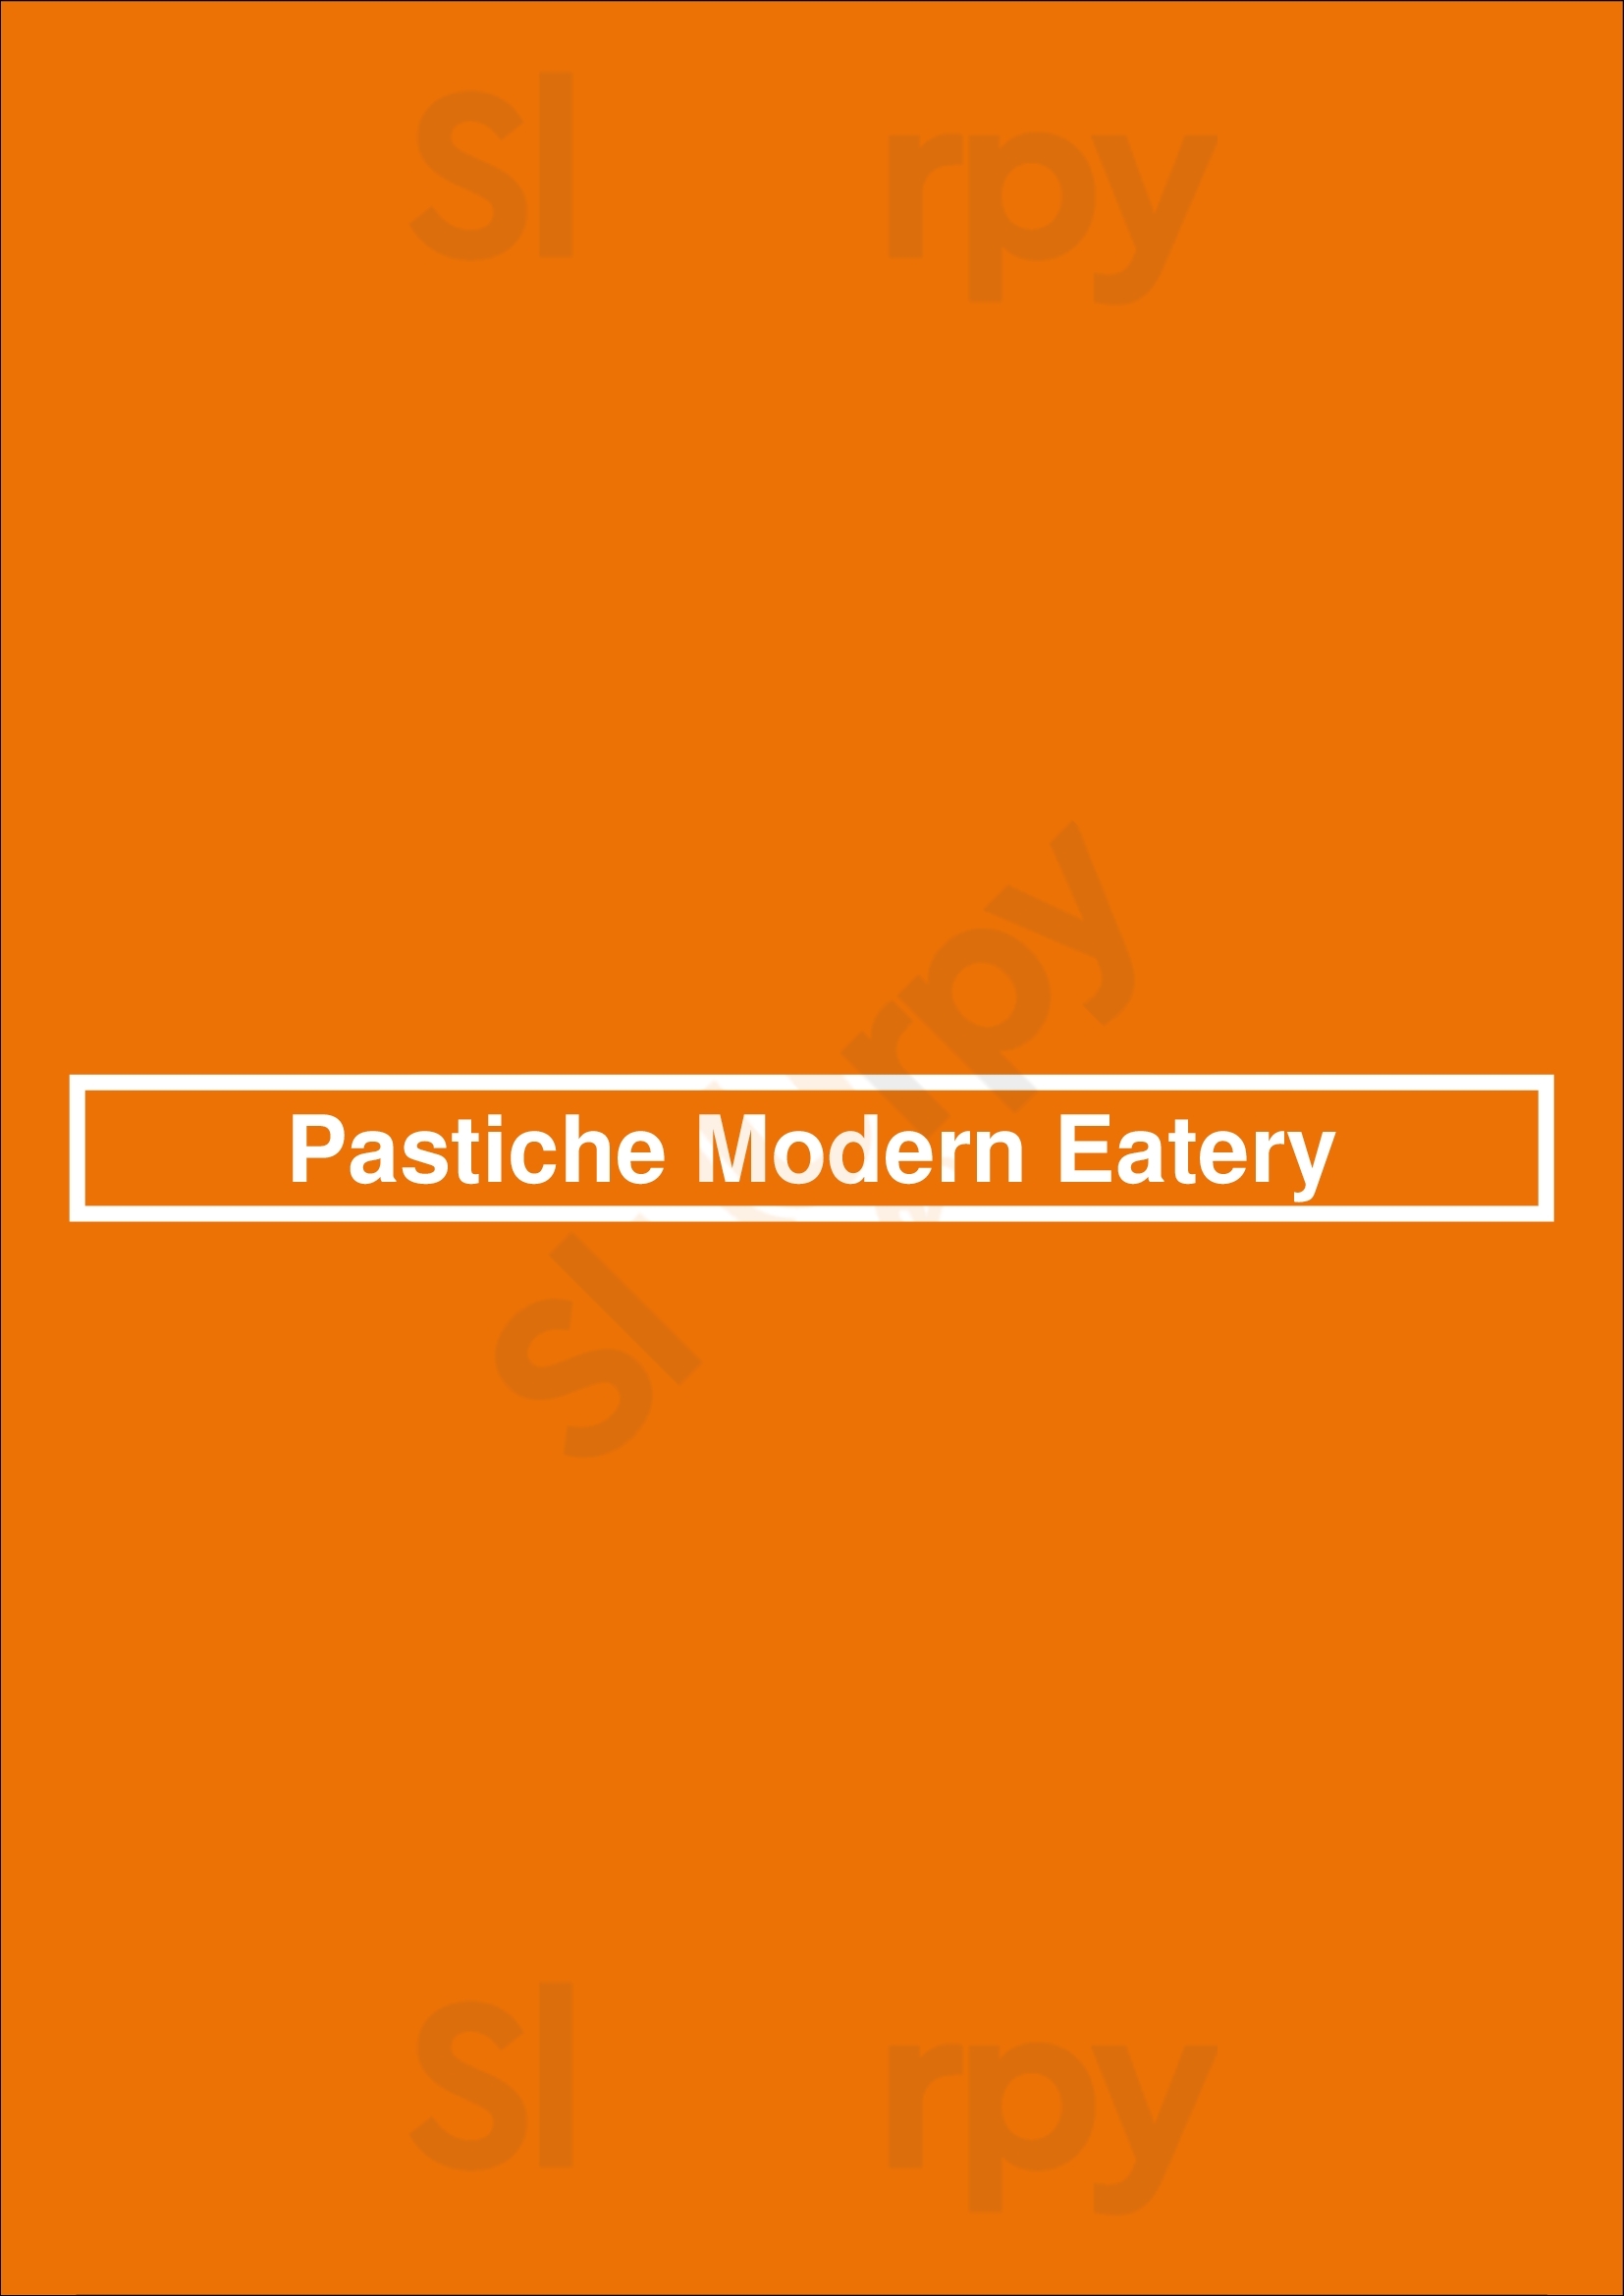 Pastiche Modern Eatery Tucson Menu - 1